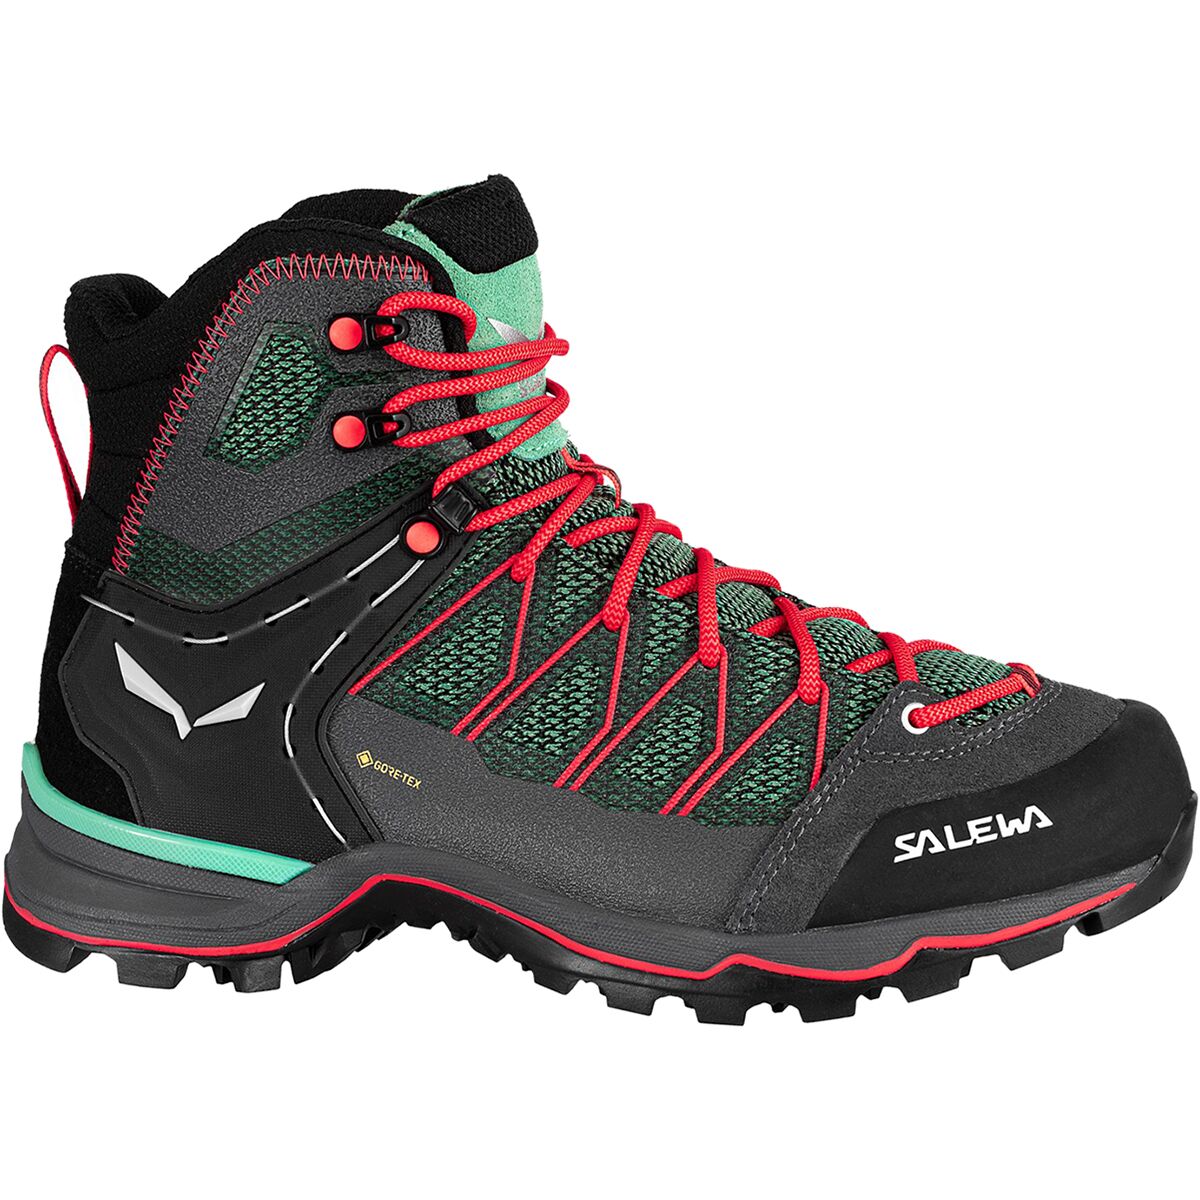 Mountain Trainer Lite Mid GTX Hiking Boot - Women